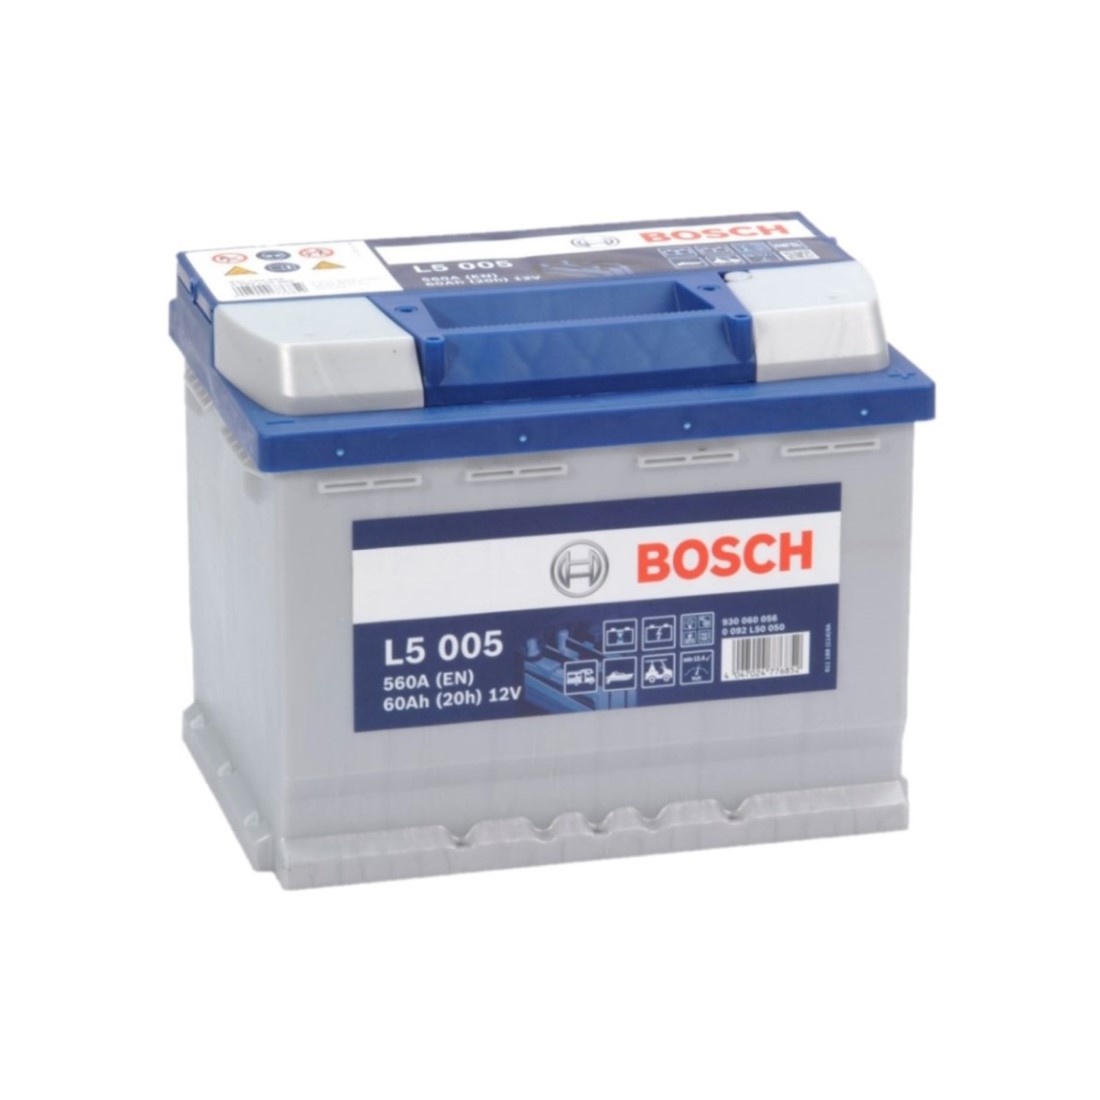 Hysterisch Microcomputer Ervaren persoon Bosch Accu semi tractie 12 volt 60 ah Type L 5005 - Accu Service Holland